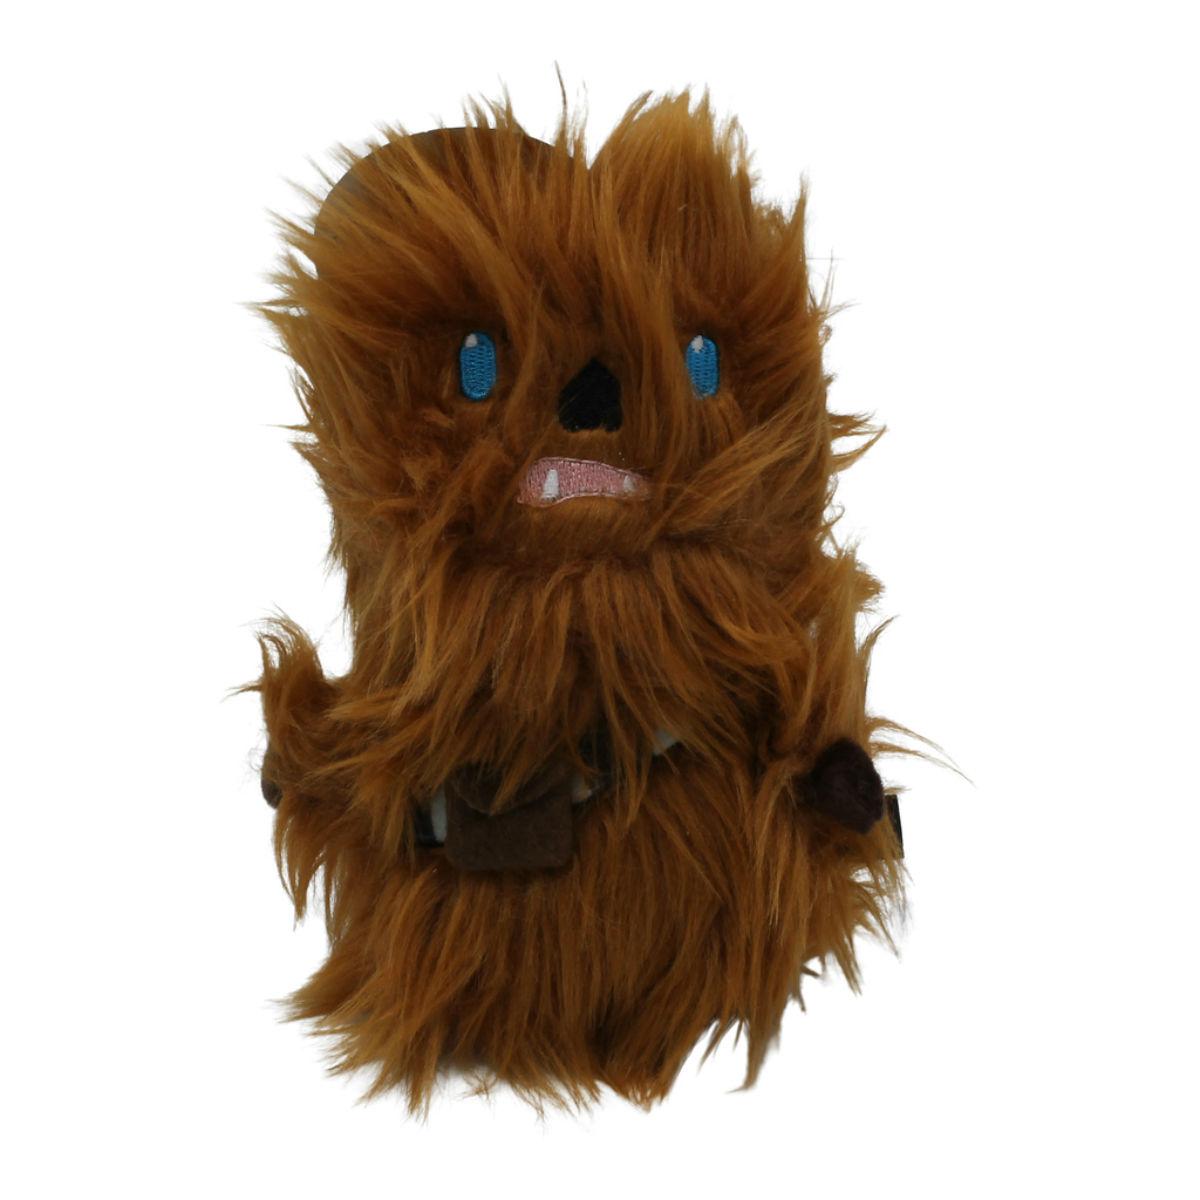 Star Wars Plush Dog Toy - Chewbacca